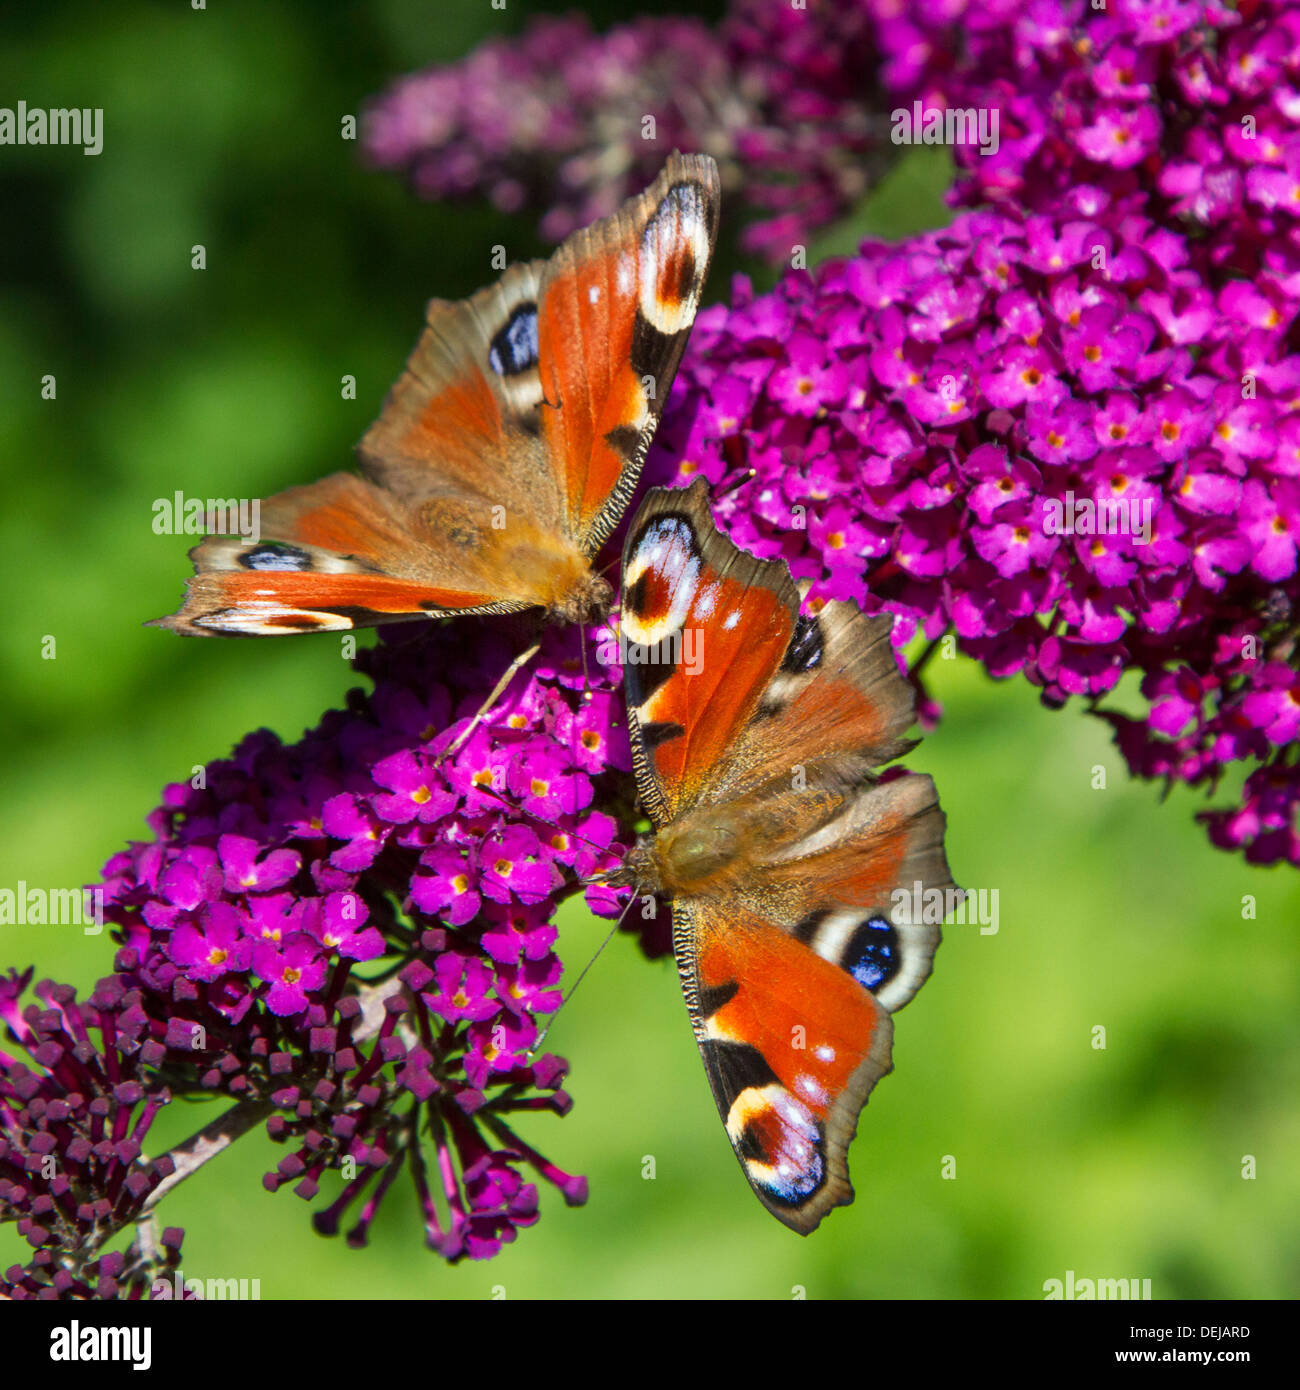 Two European Peacock butterflies (Aglais io / Inachis io) on summer lilac flowers / butterfly-bush (Buddleja davidii) Stock Photo